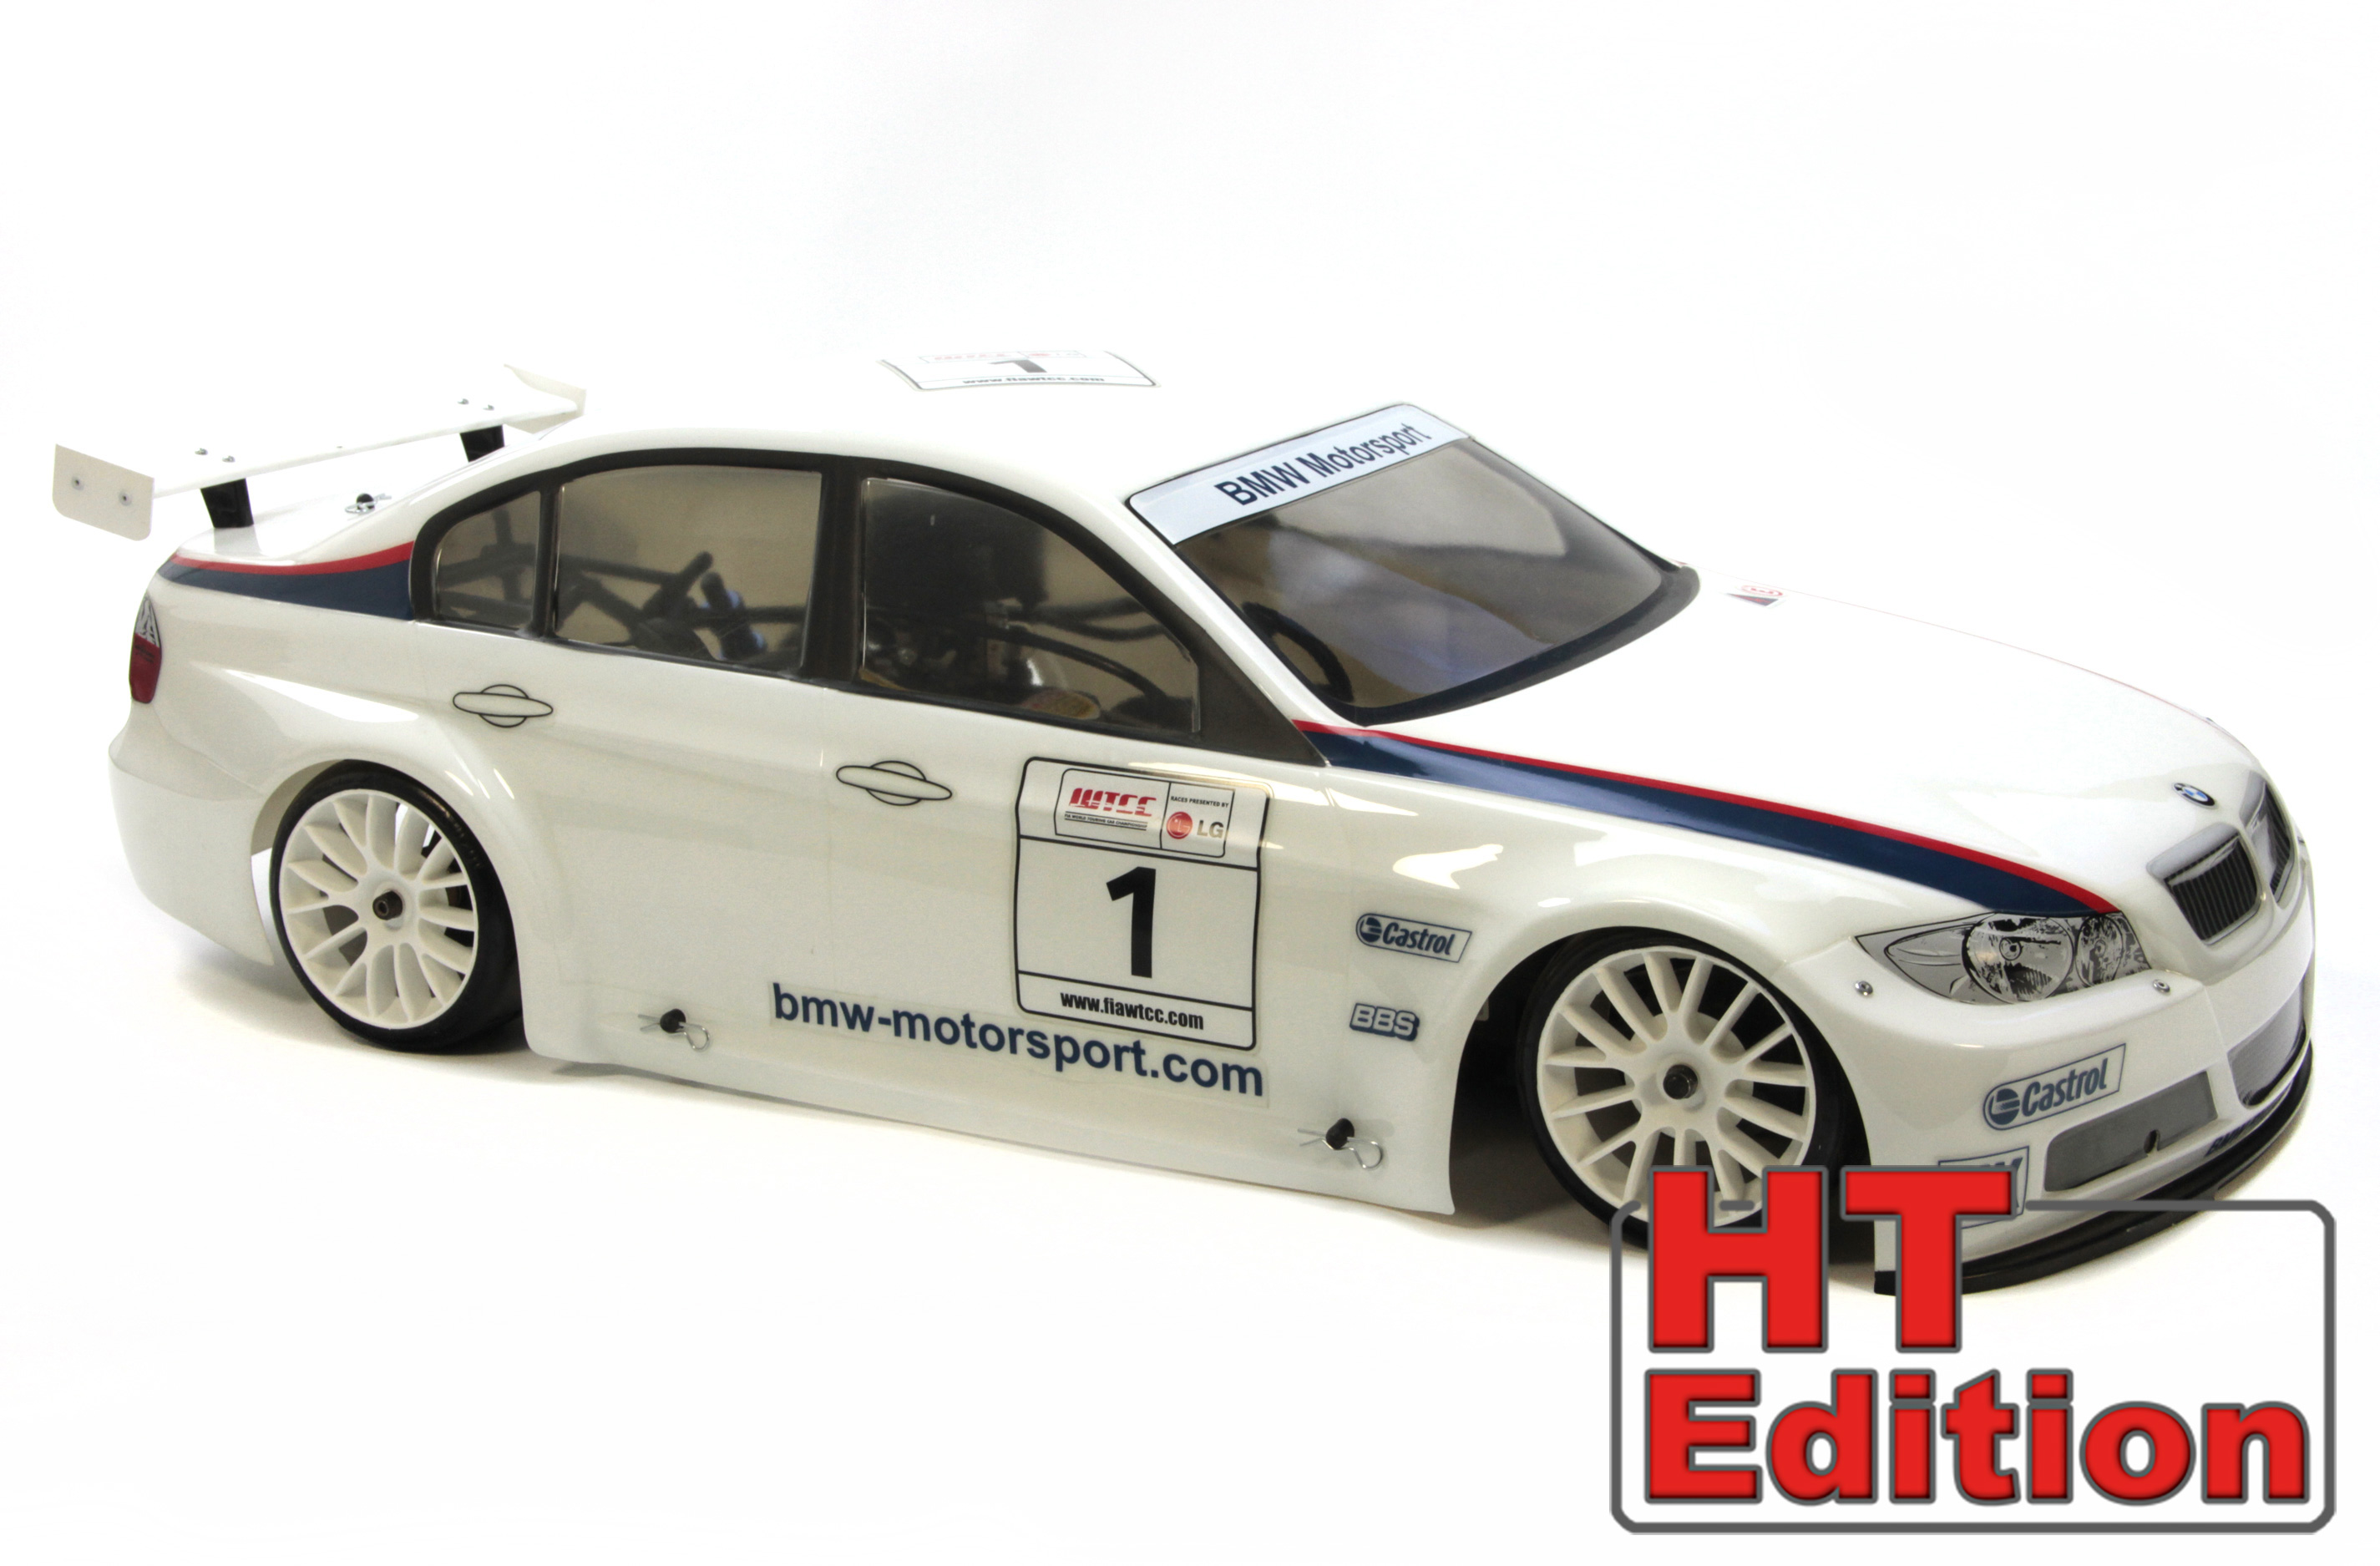 FG Sportsline 4WD-530 with BMW 320si body HT-Edition